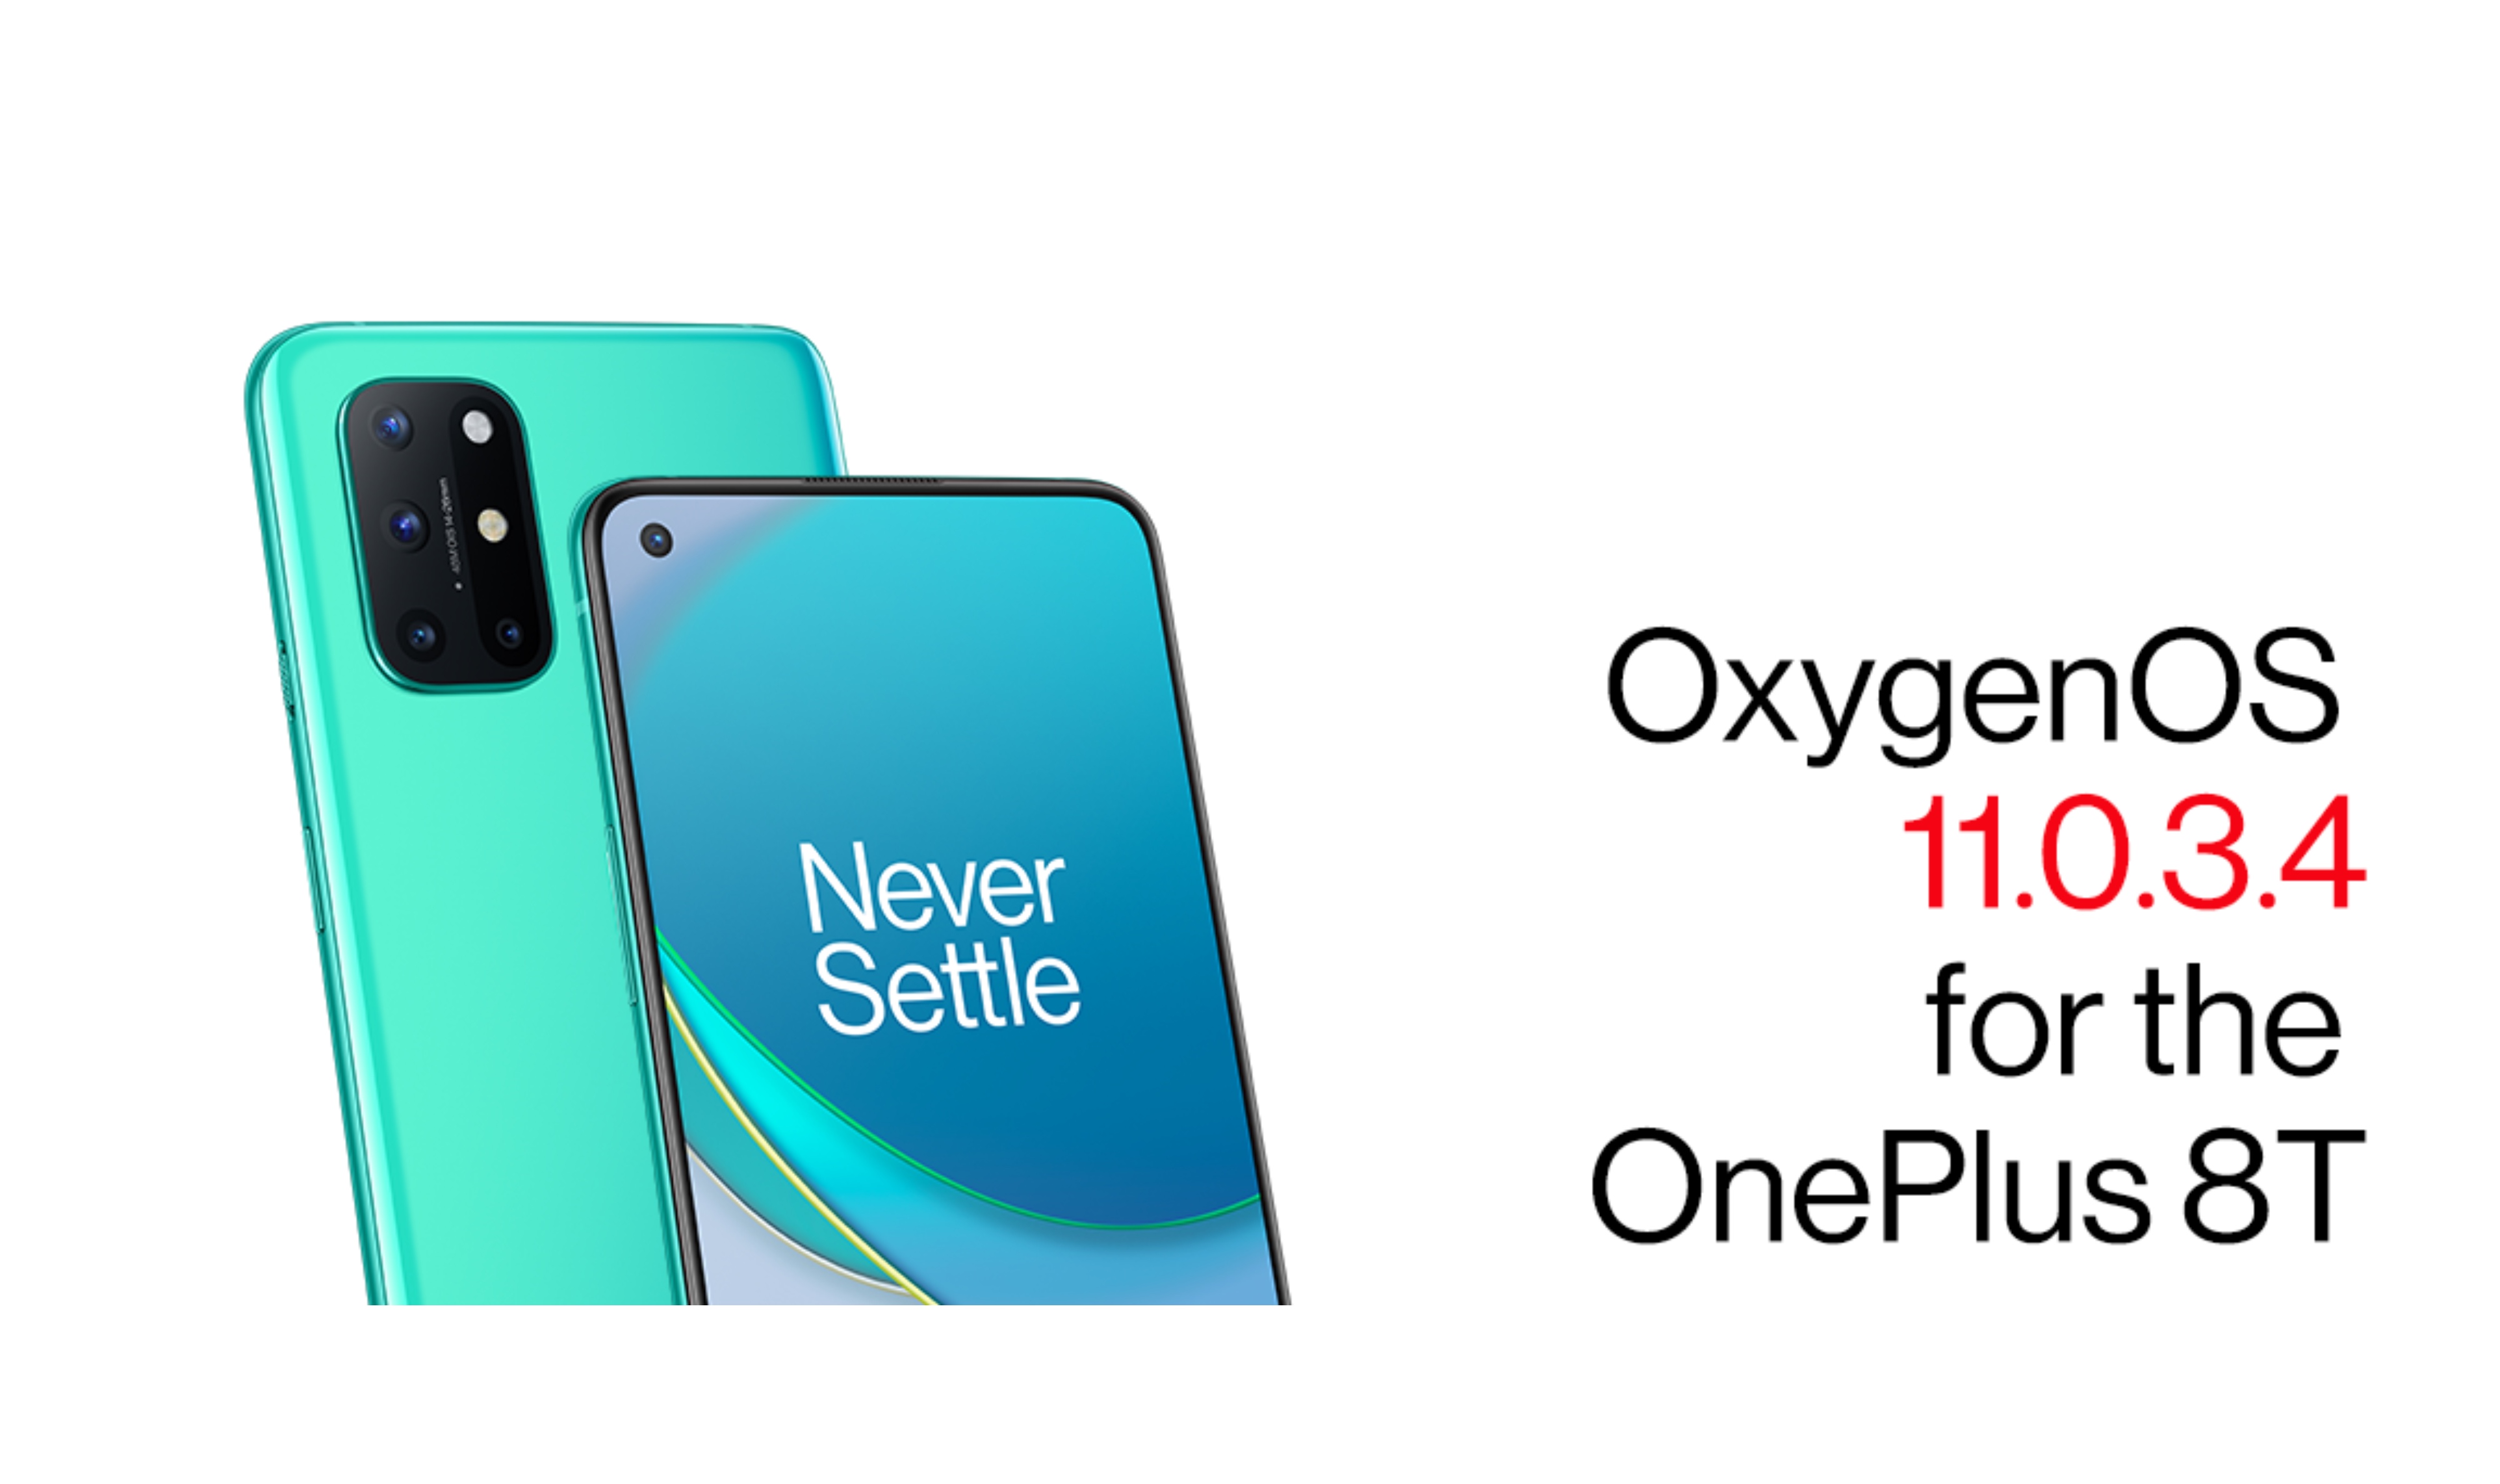 OnePlus 8T OxygenOS 11.0.3.4 Update